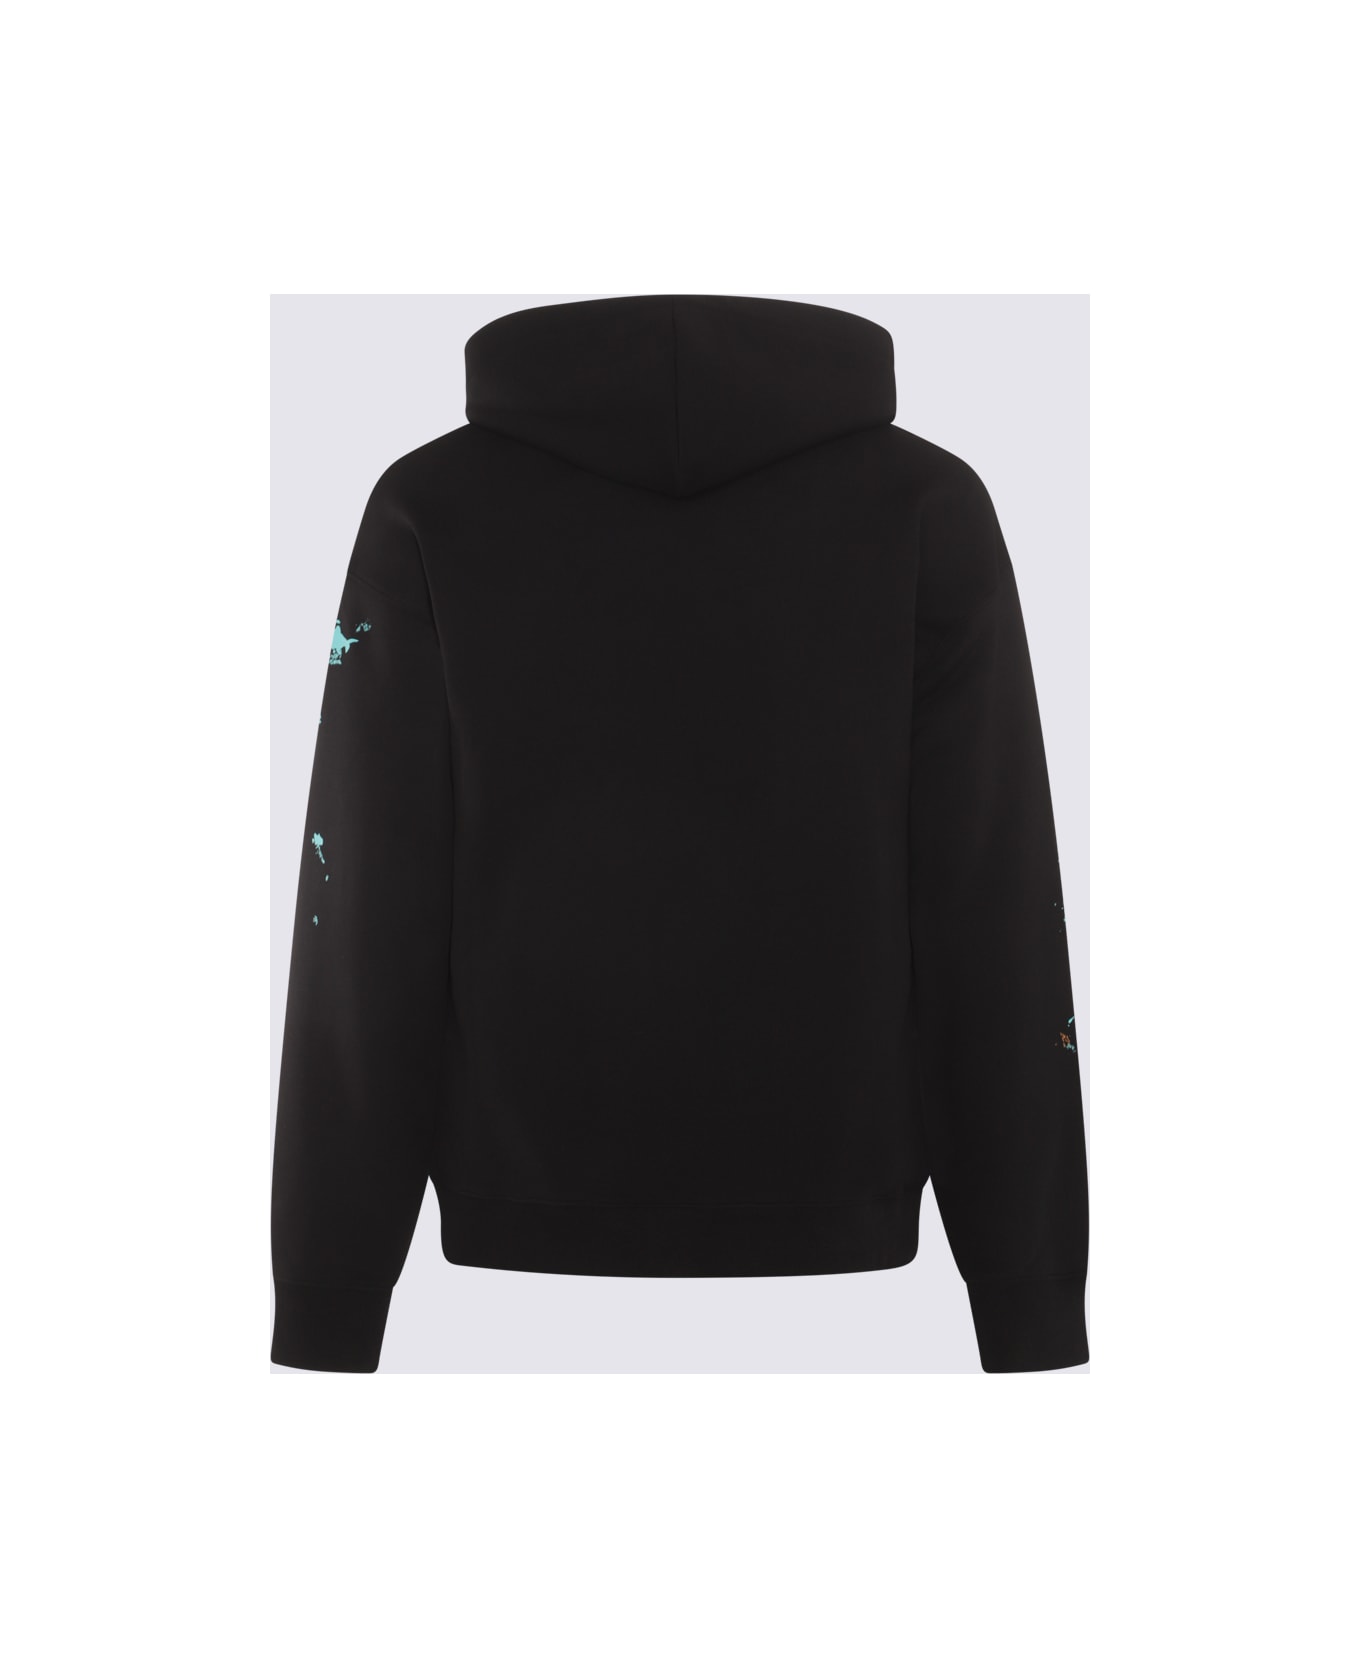 Moschino Black Cotton Sweatshirt - Black フリース